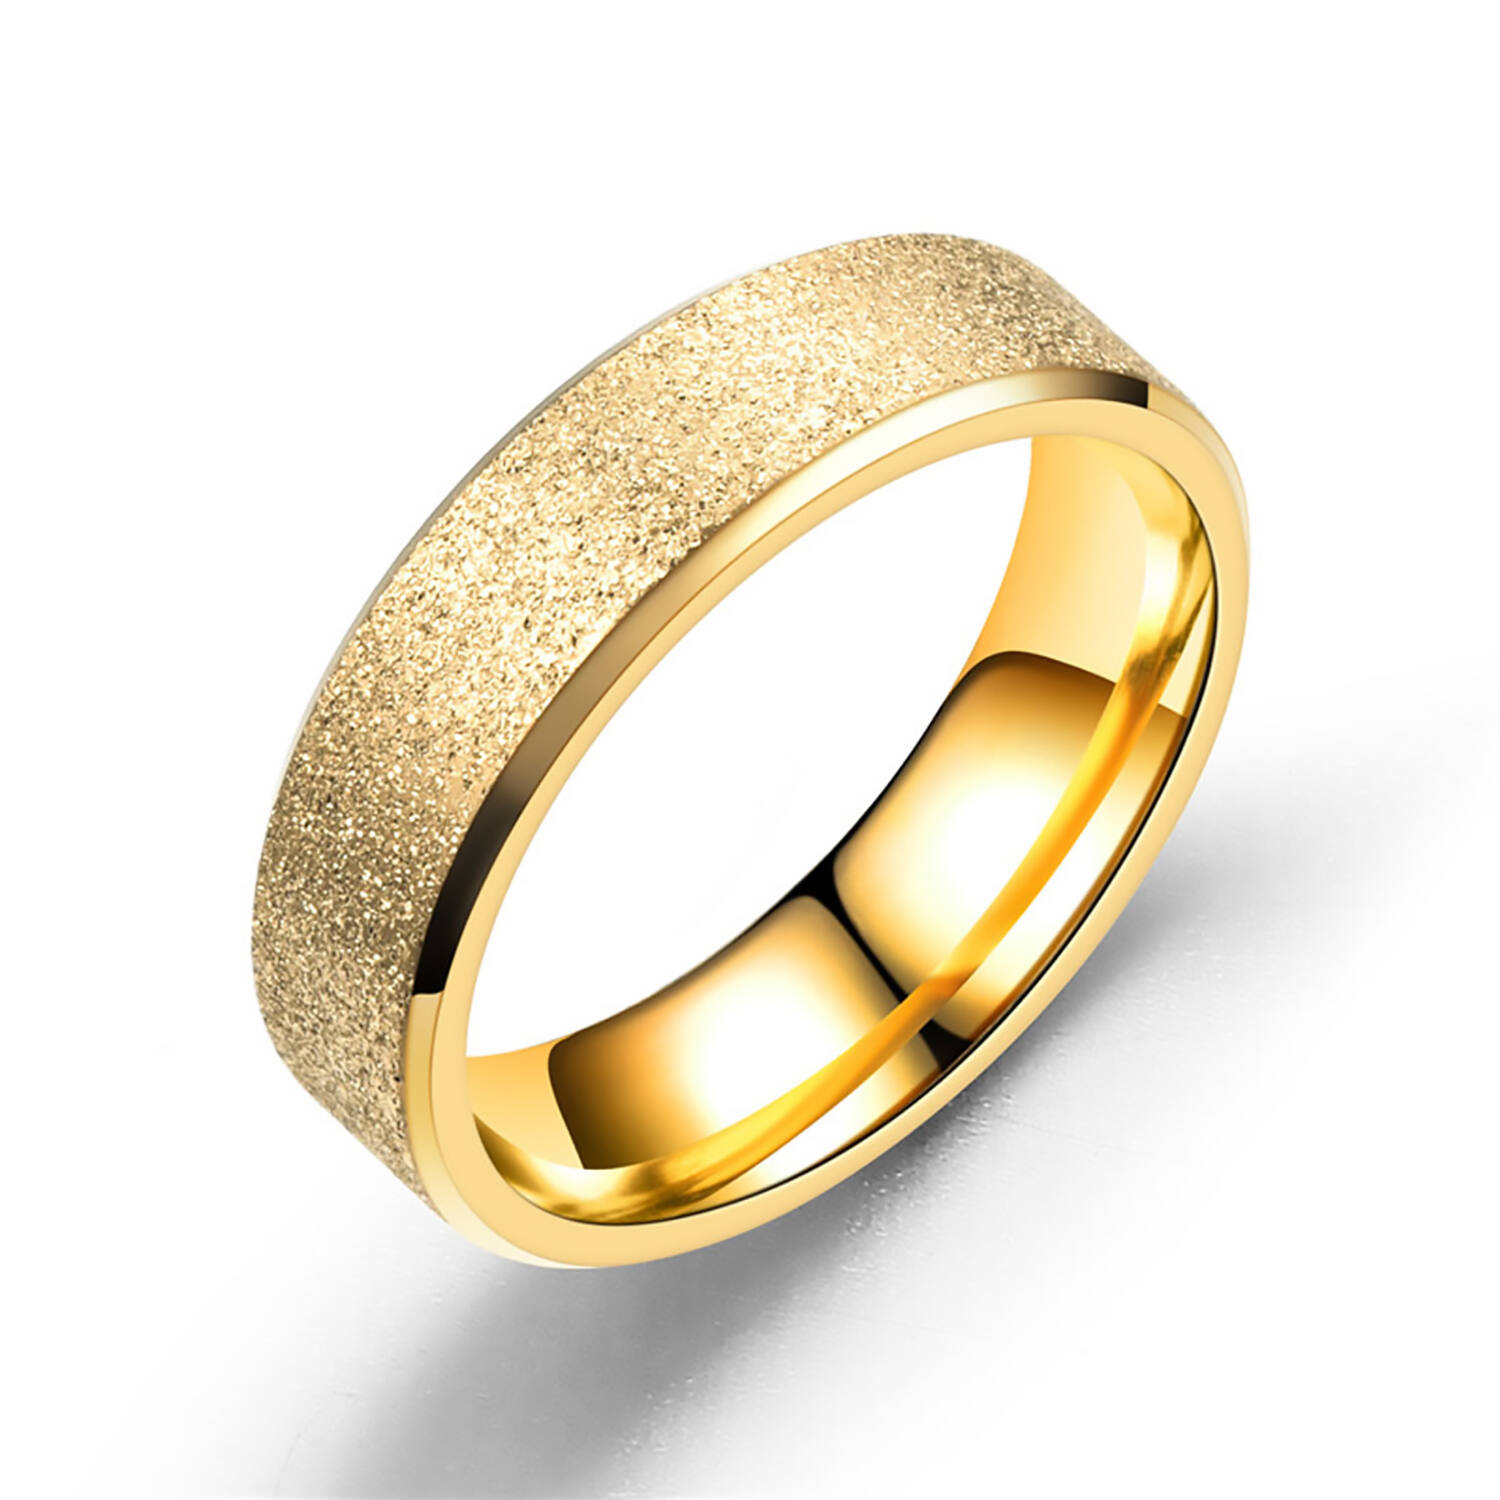 Classic 4-Prong 5mm Round Moissanite Marquise Diamond Engagement Wedding  Ring 14k 18k Rose Gold